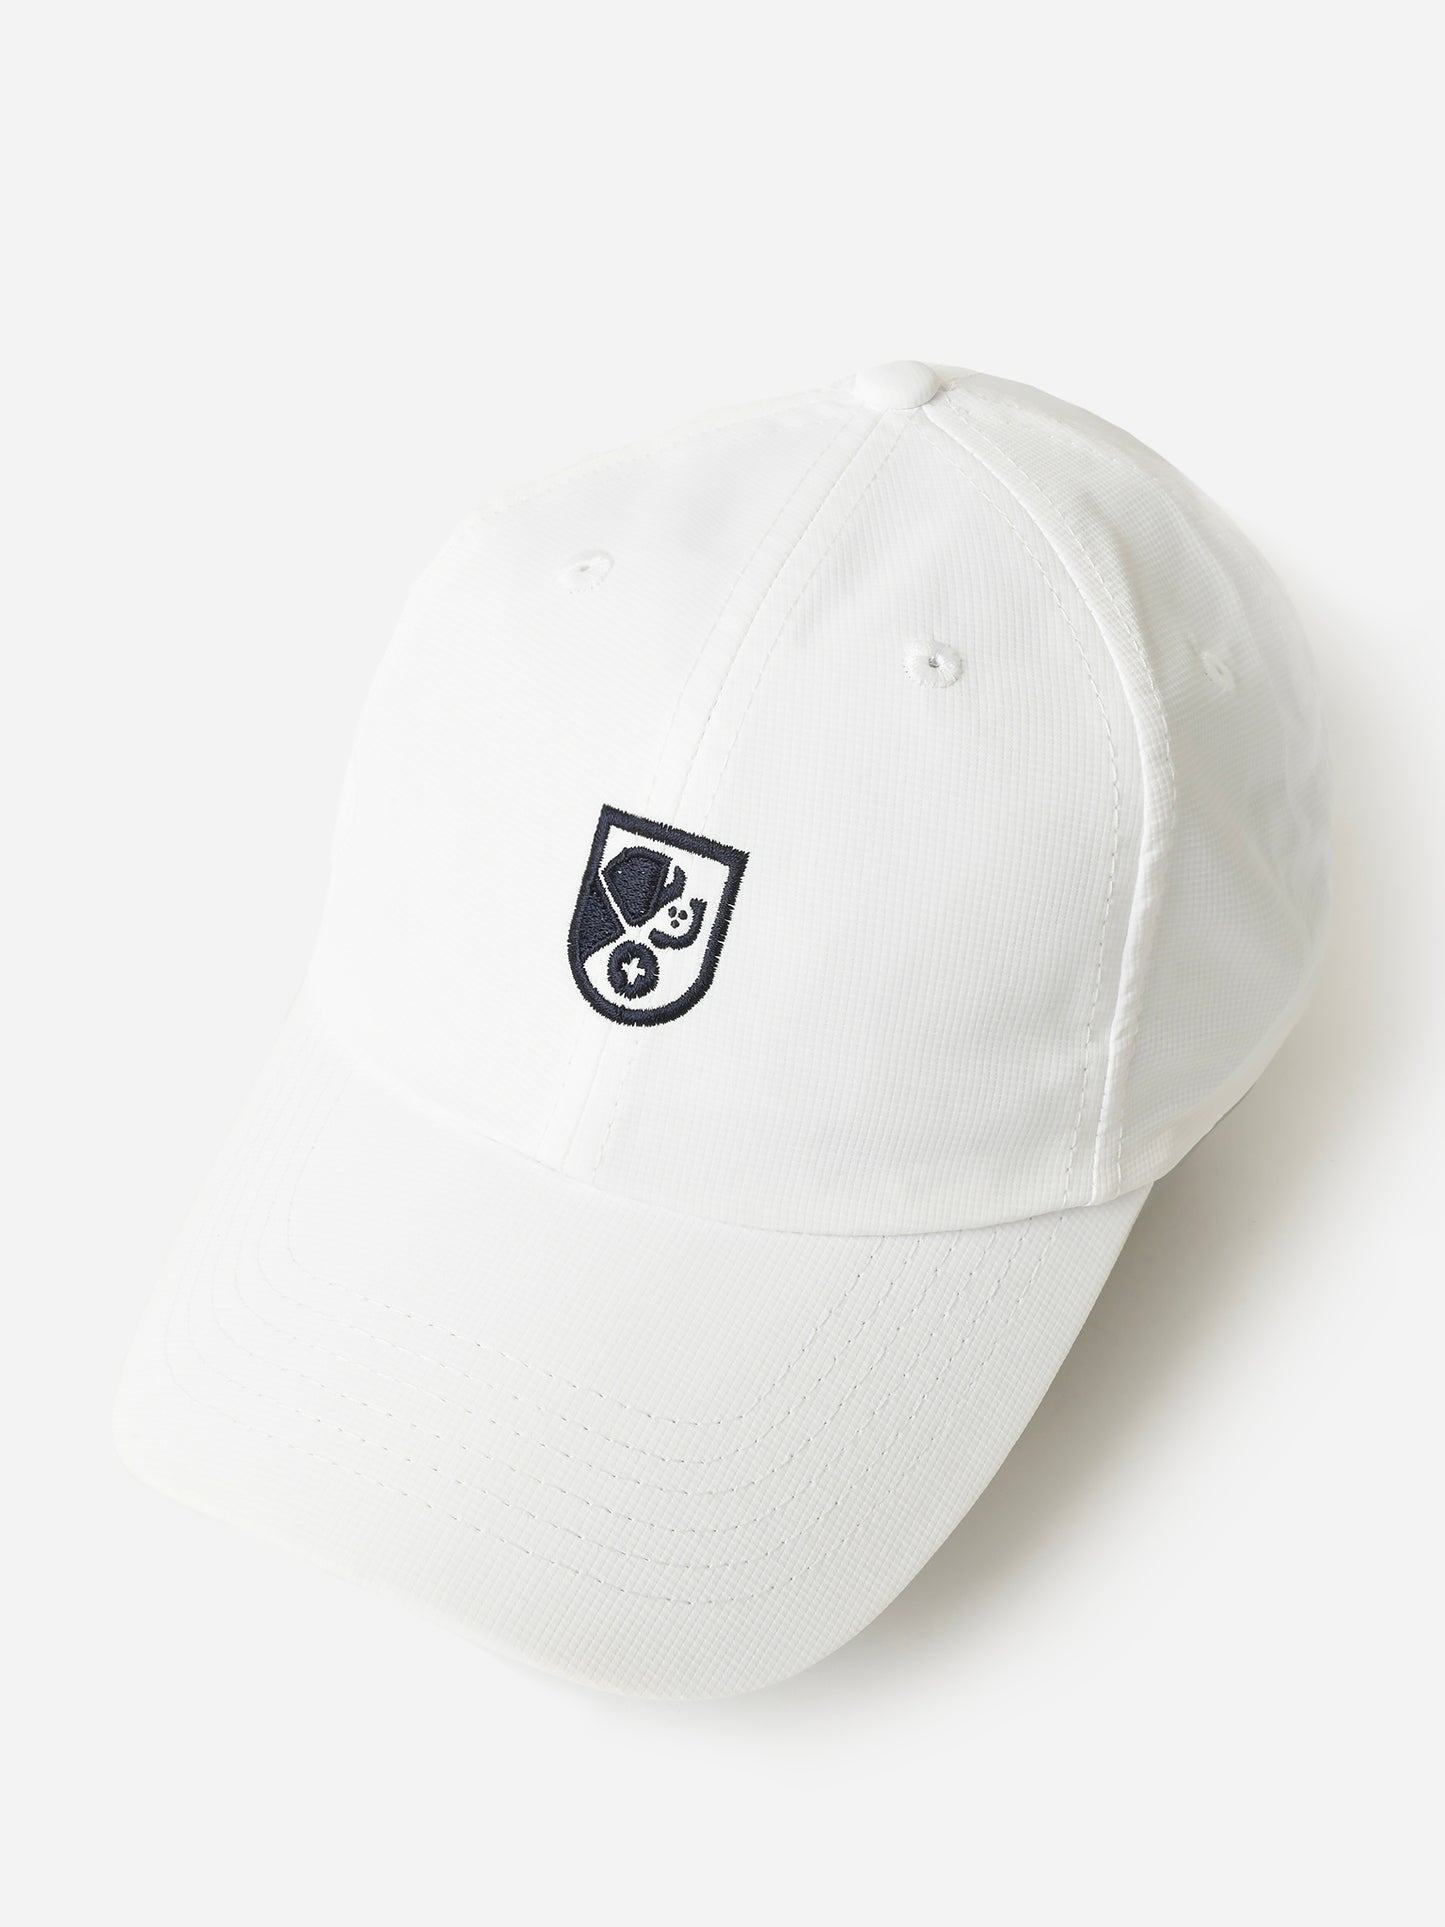 Saint Bernard Logo Performance Hat